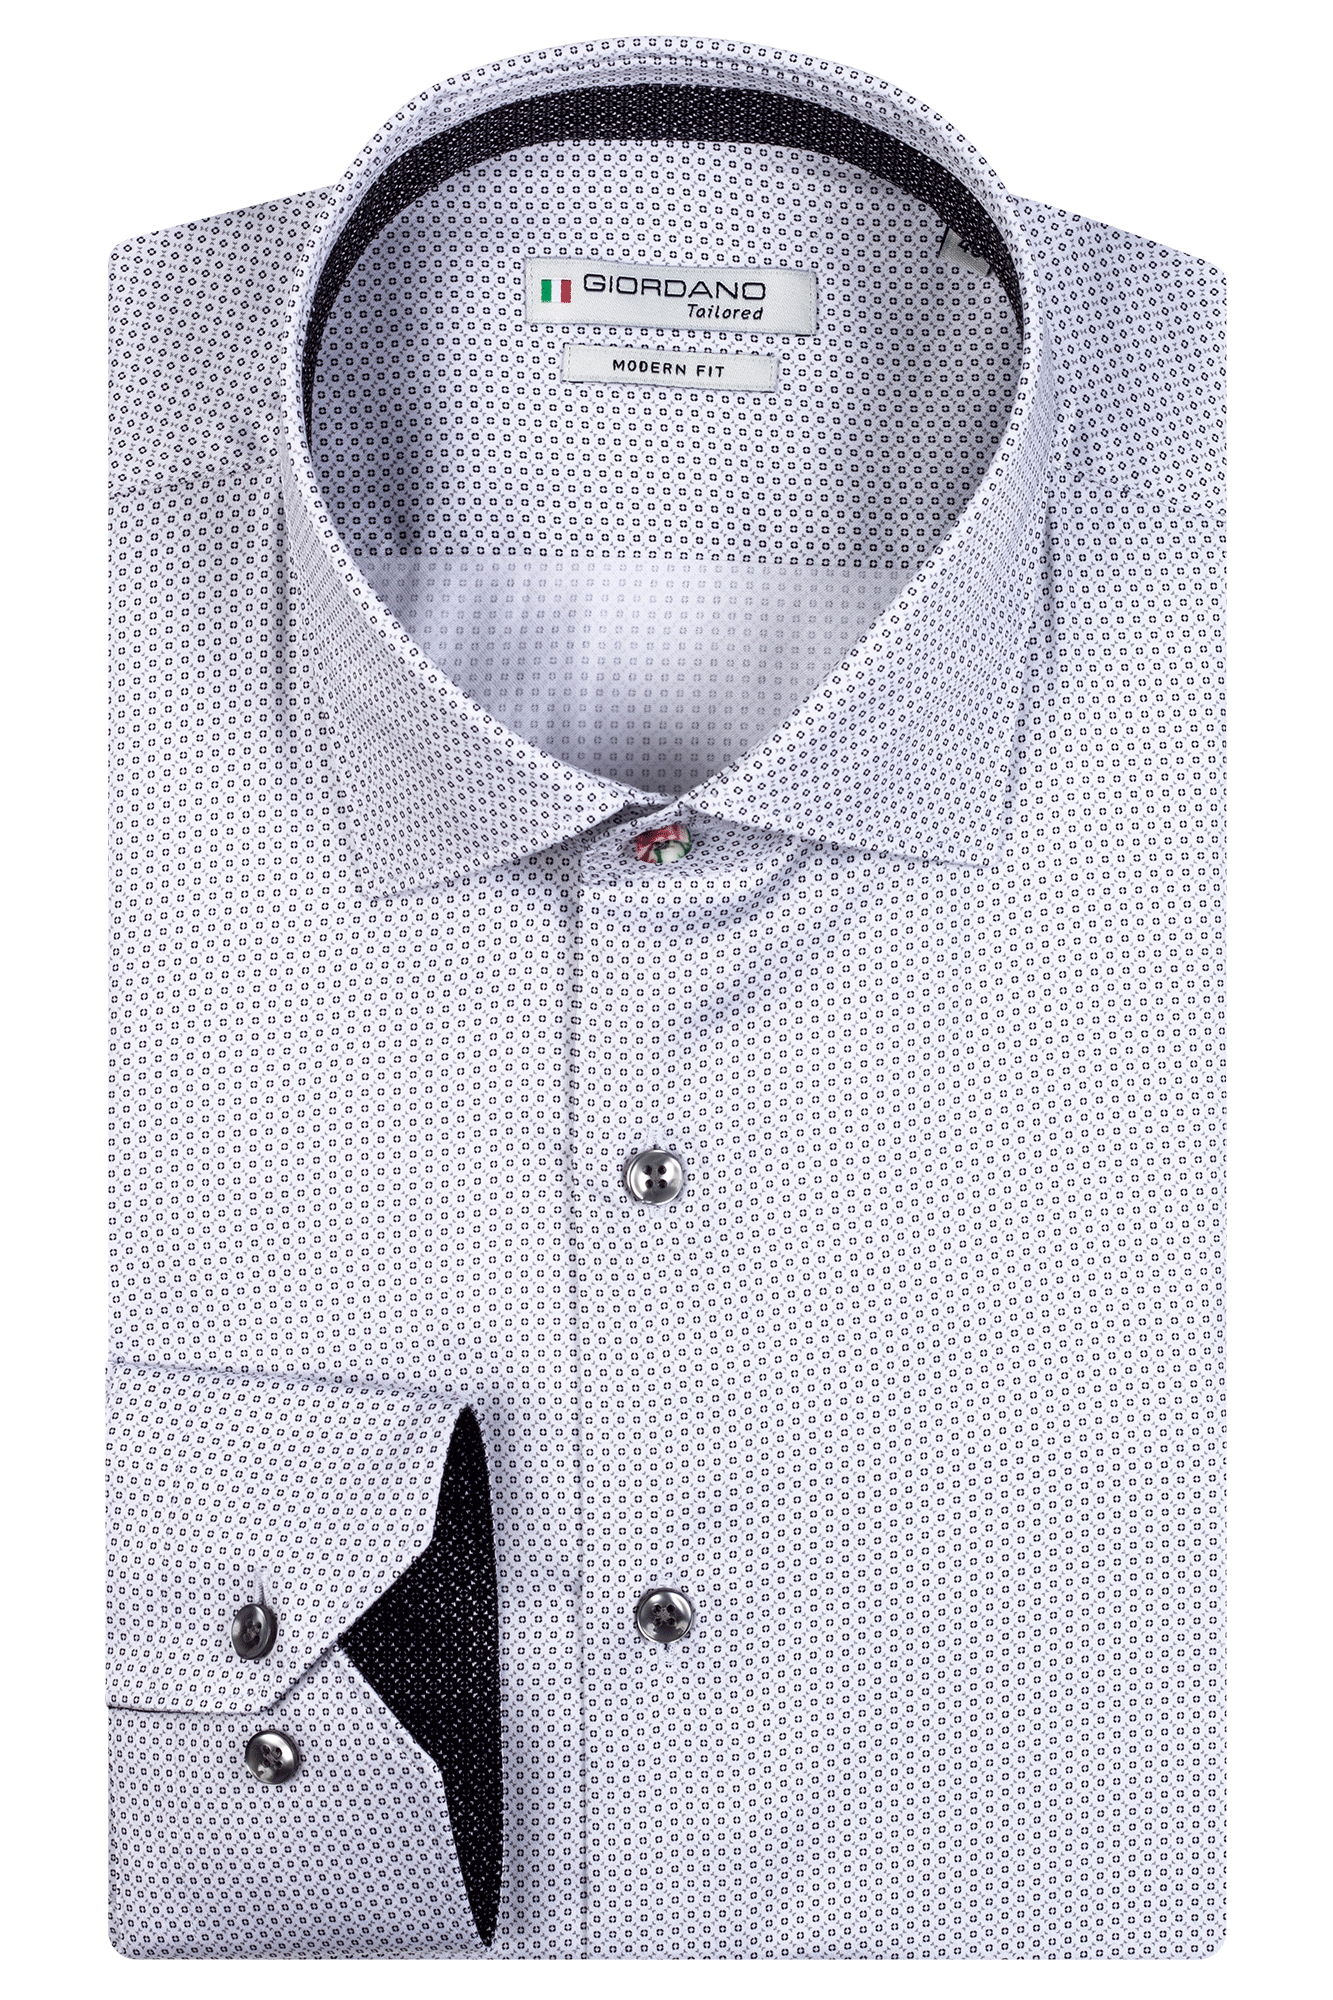 Giordano Blue and White Print Cotton Shirt